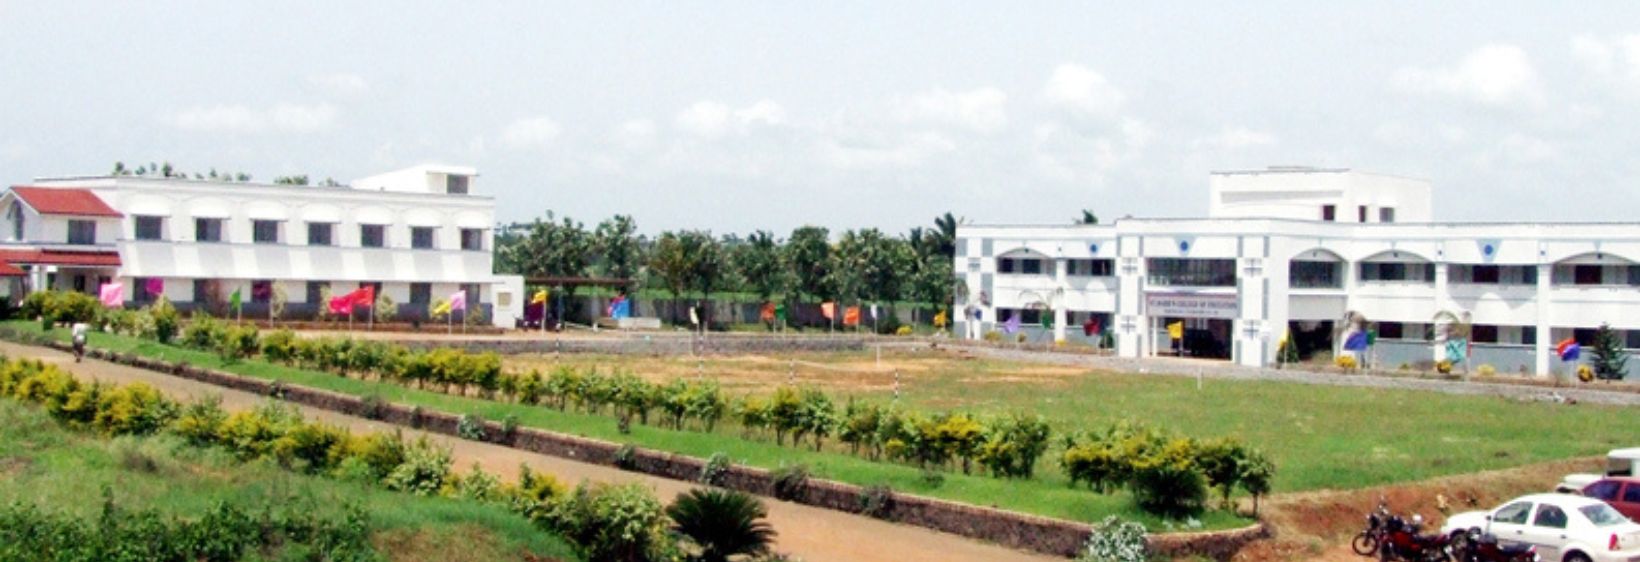 Ellen College of Nursing - Coimbatore